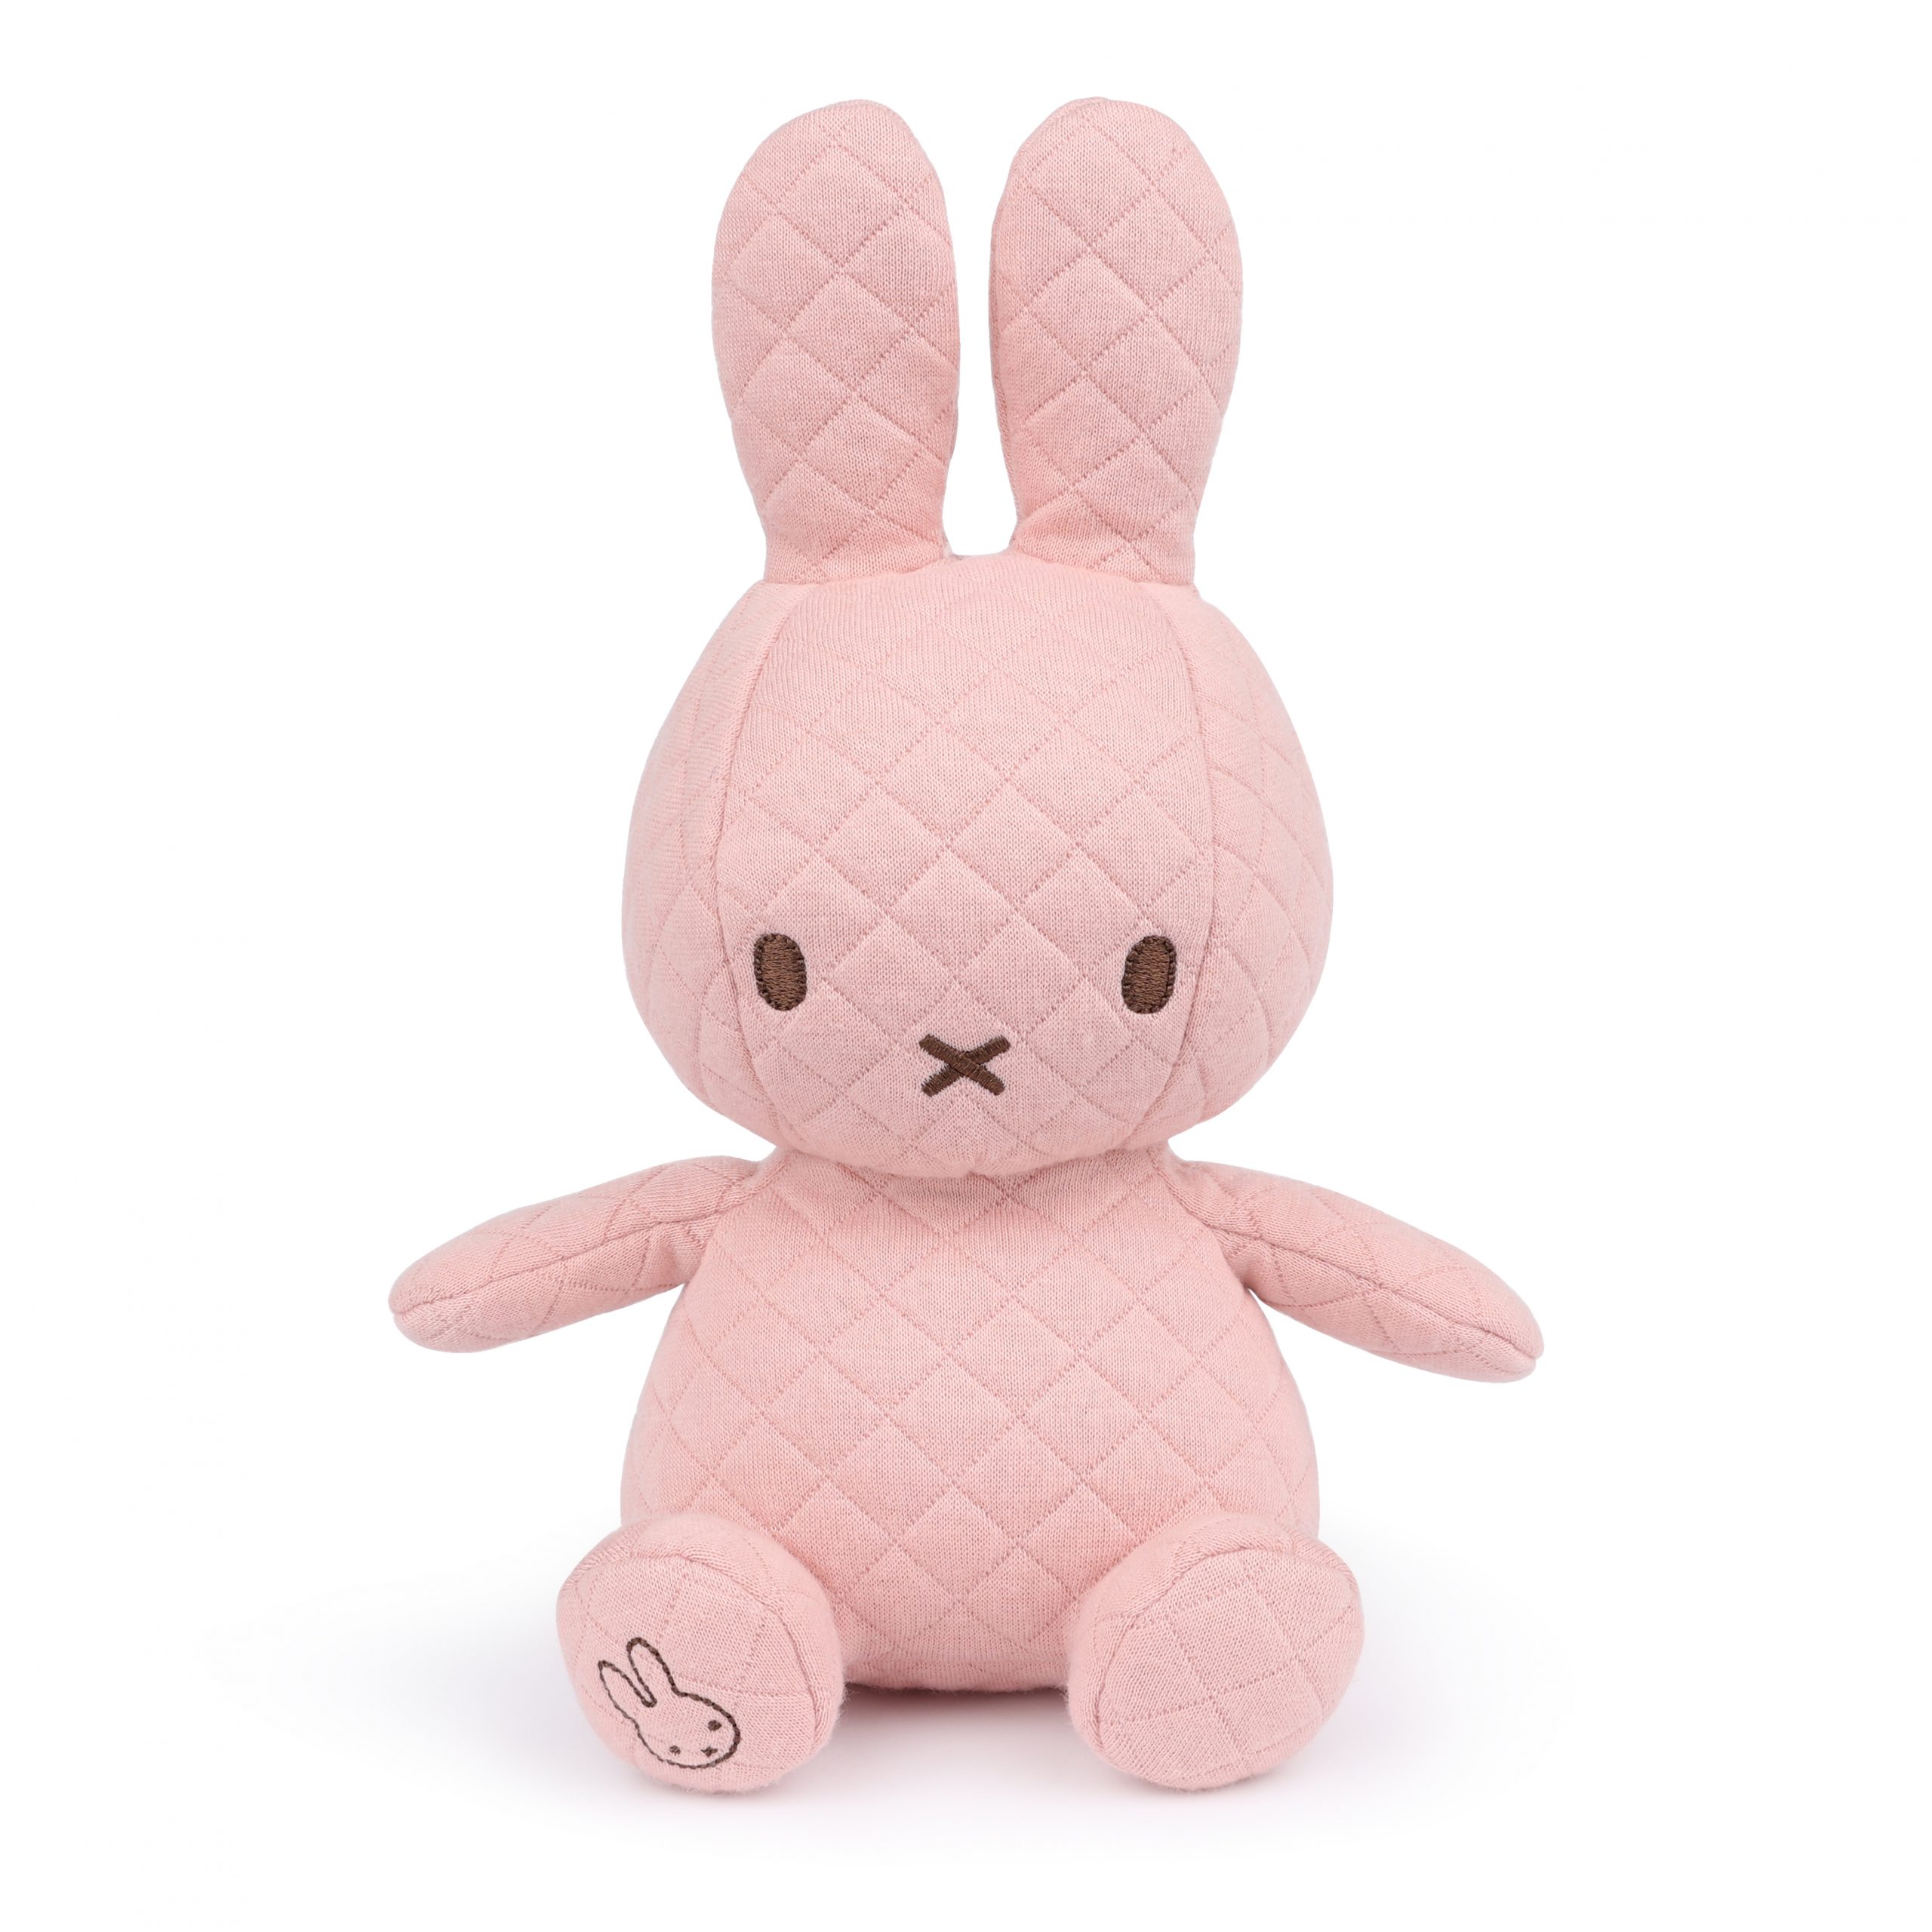 Bonbon Miffy Sitting Pink in giftbox - 23 cm